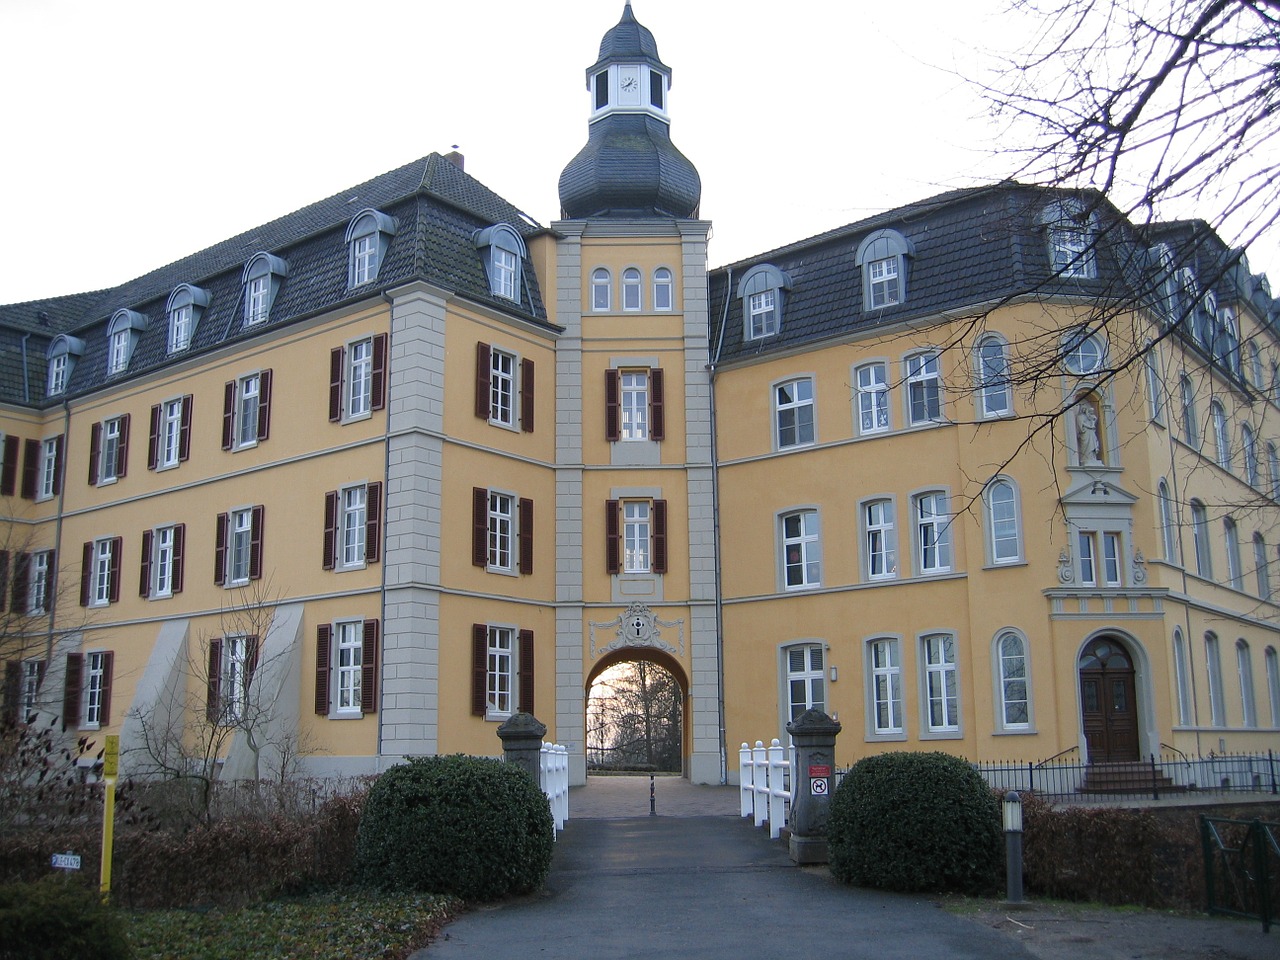 monastery niederrhein education site free photo